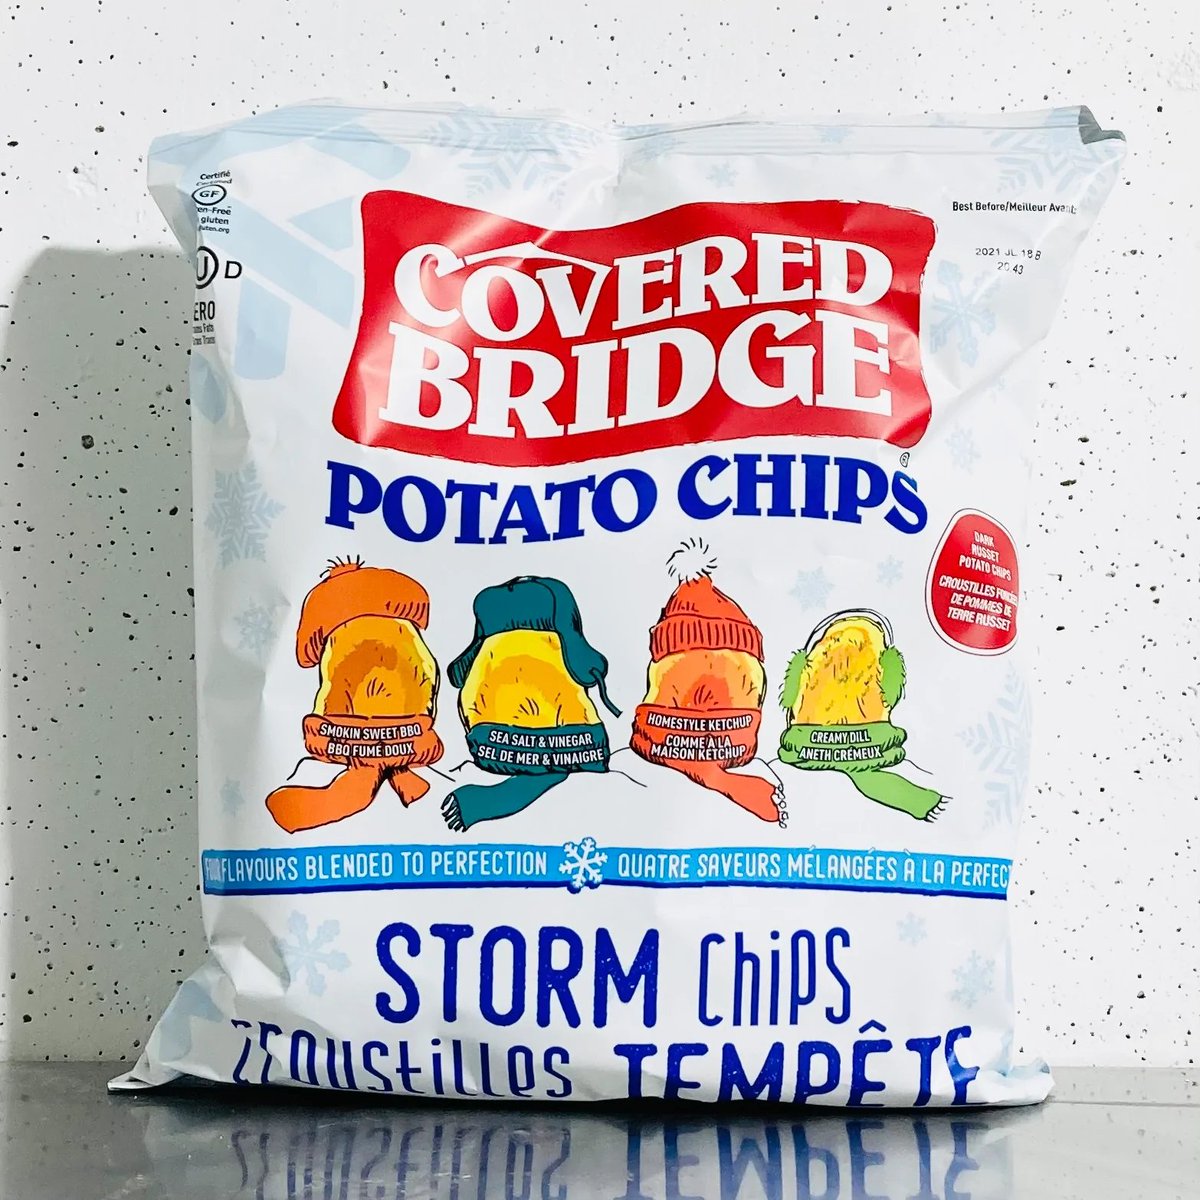 Get yer' storm chips #AtlanticCanada #CoveredBridge 

#TropicalCyclone #Fiona